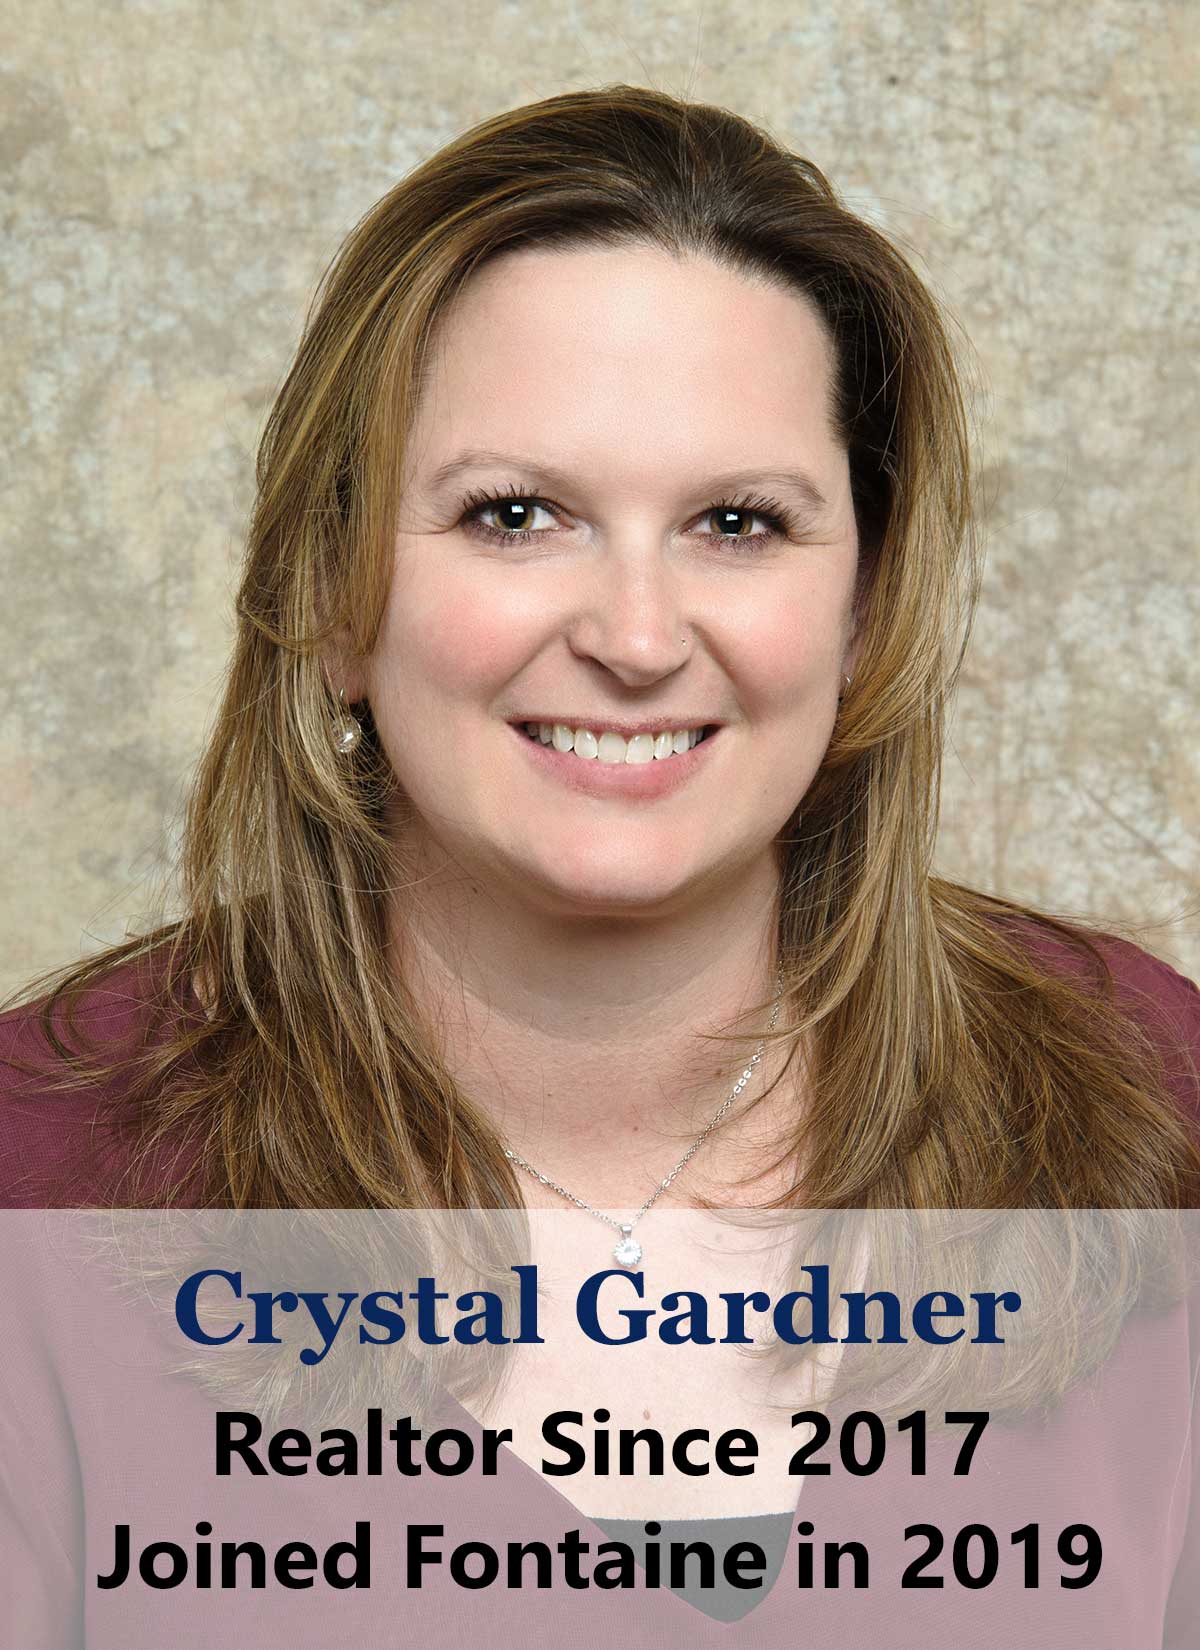 Crystal Gardner